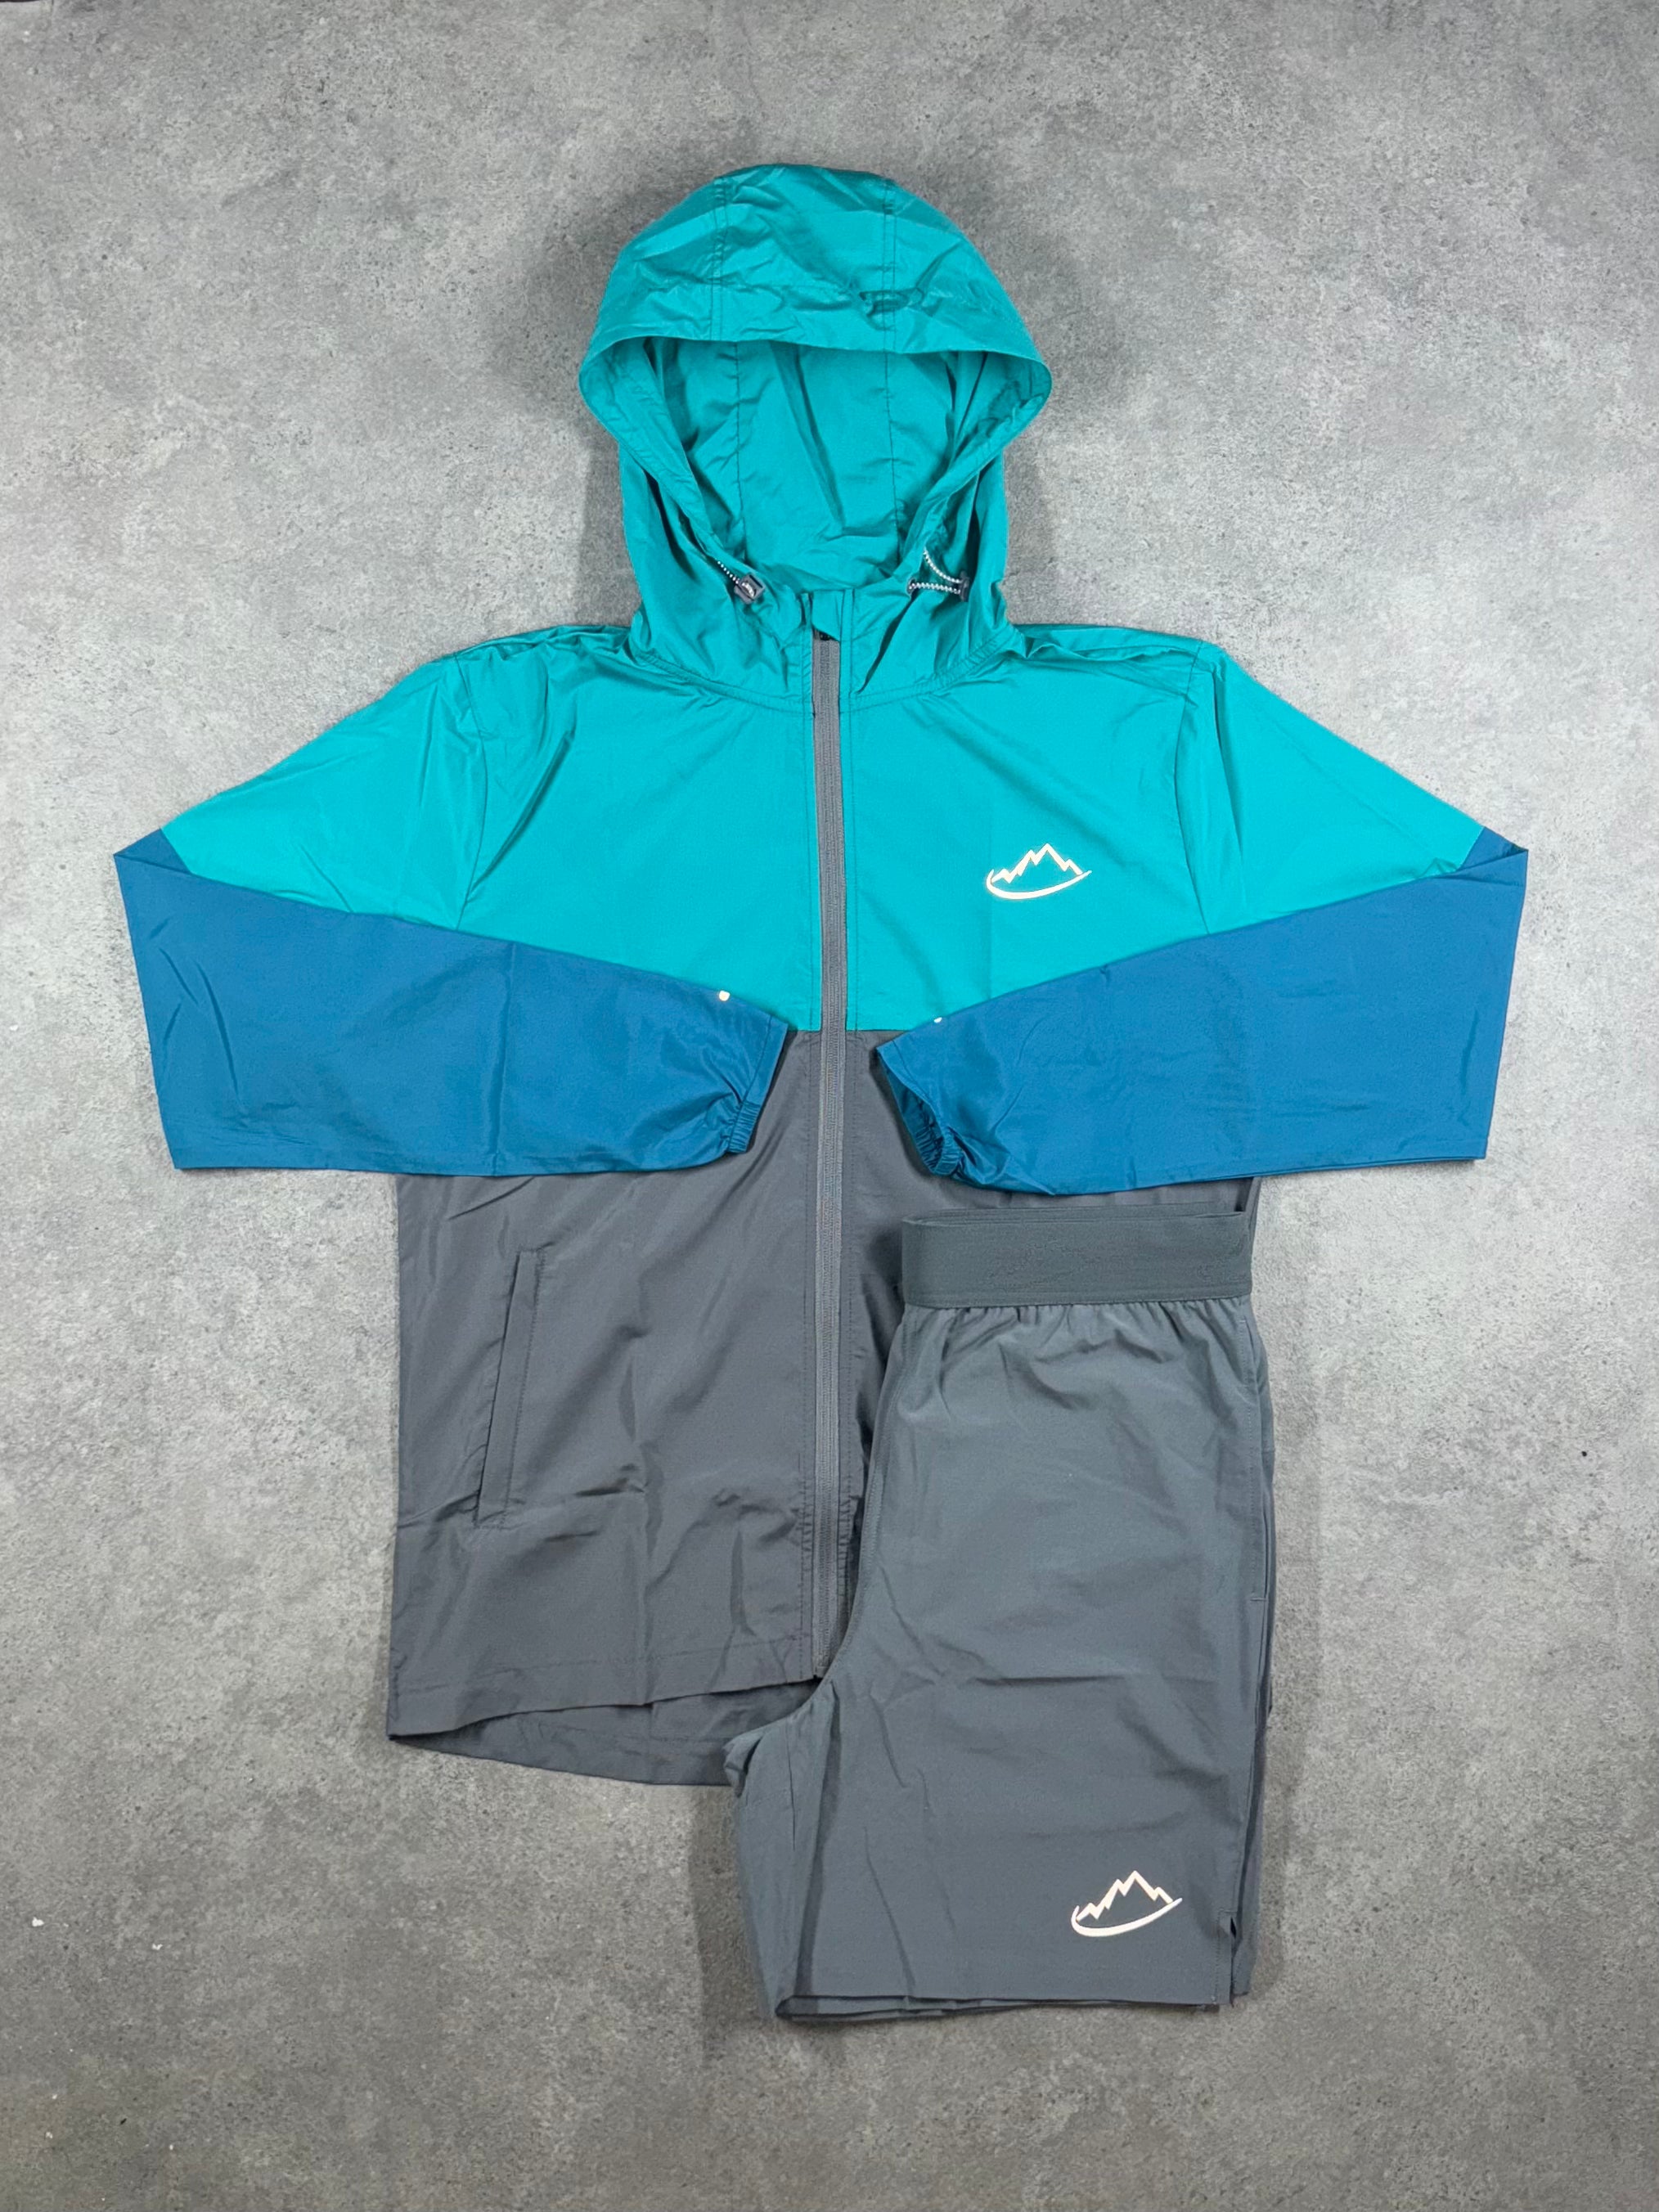 Adapt To - Running Lite Jacket/Shorts - Teal/Grey